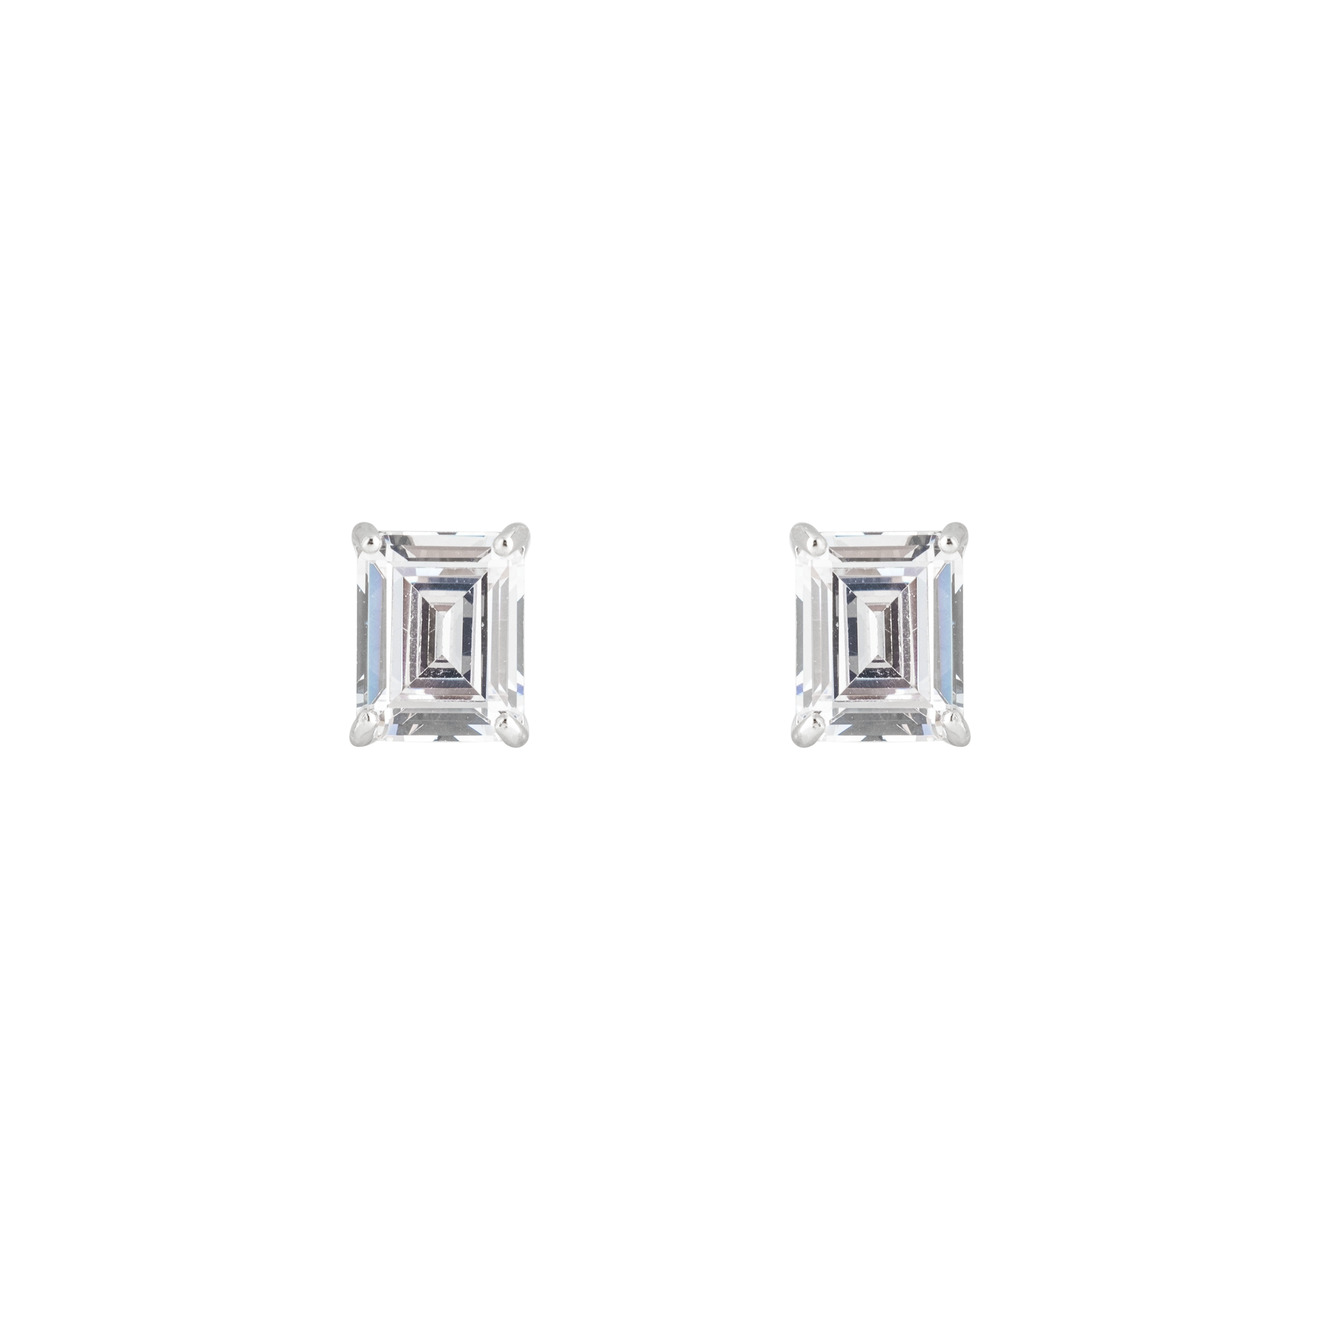 Herald Percy Серебристые серьги-пусеты с белым кристаллом lisa smith серебристые серьги кресты с кристаллом